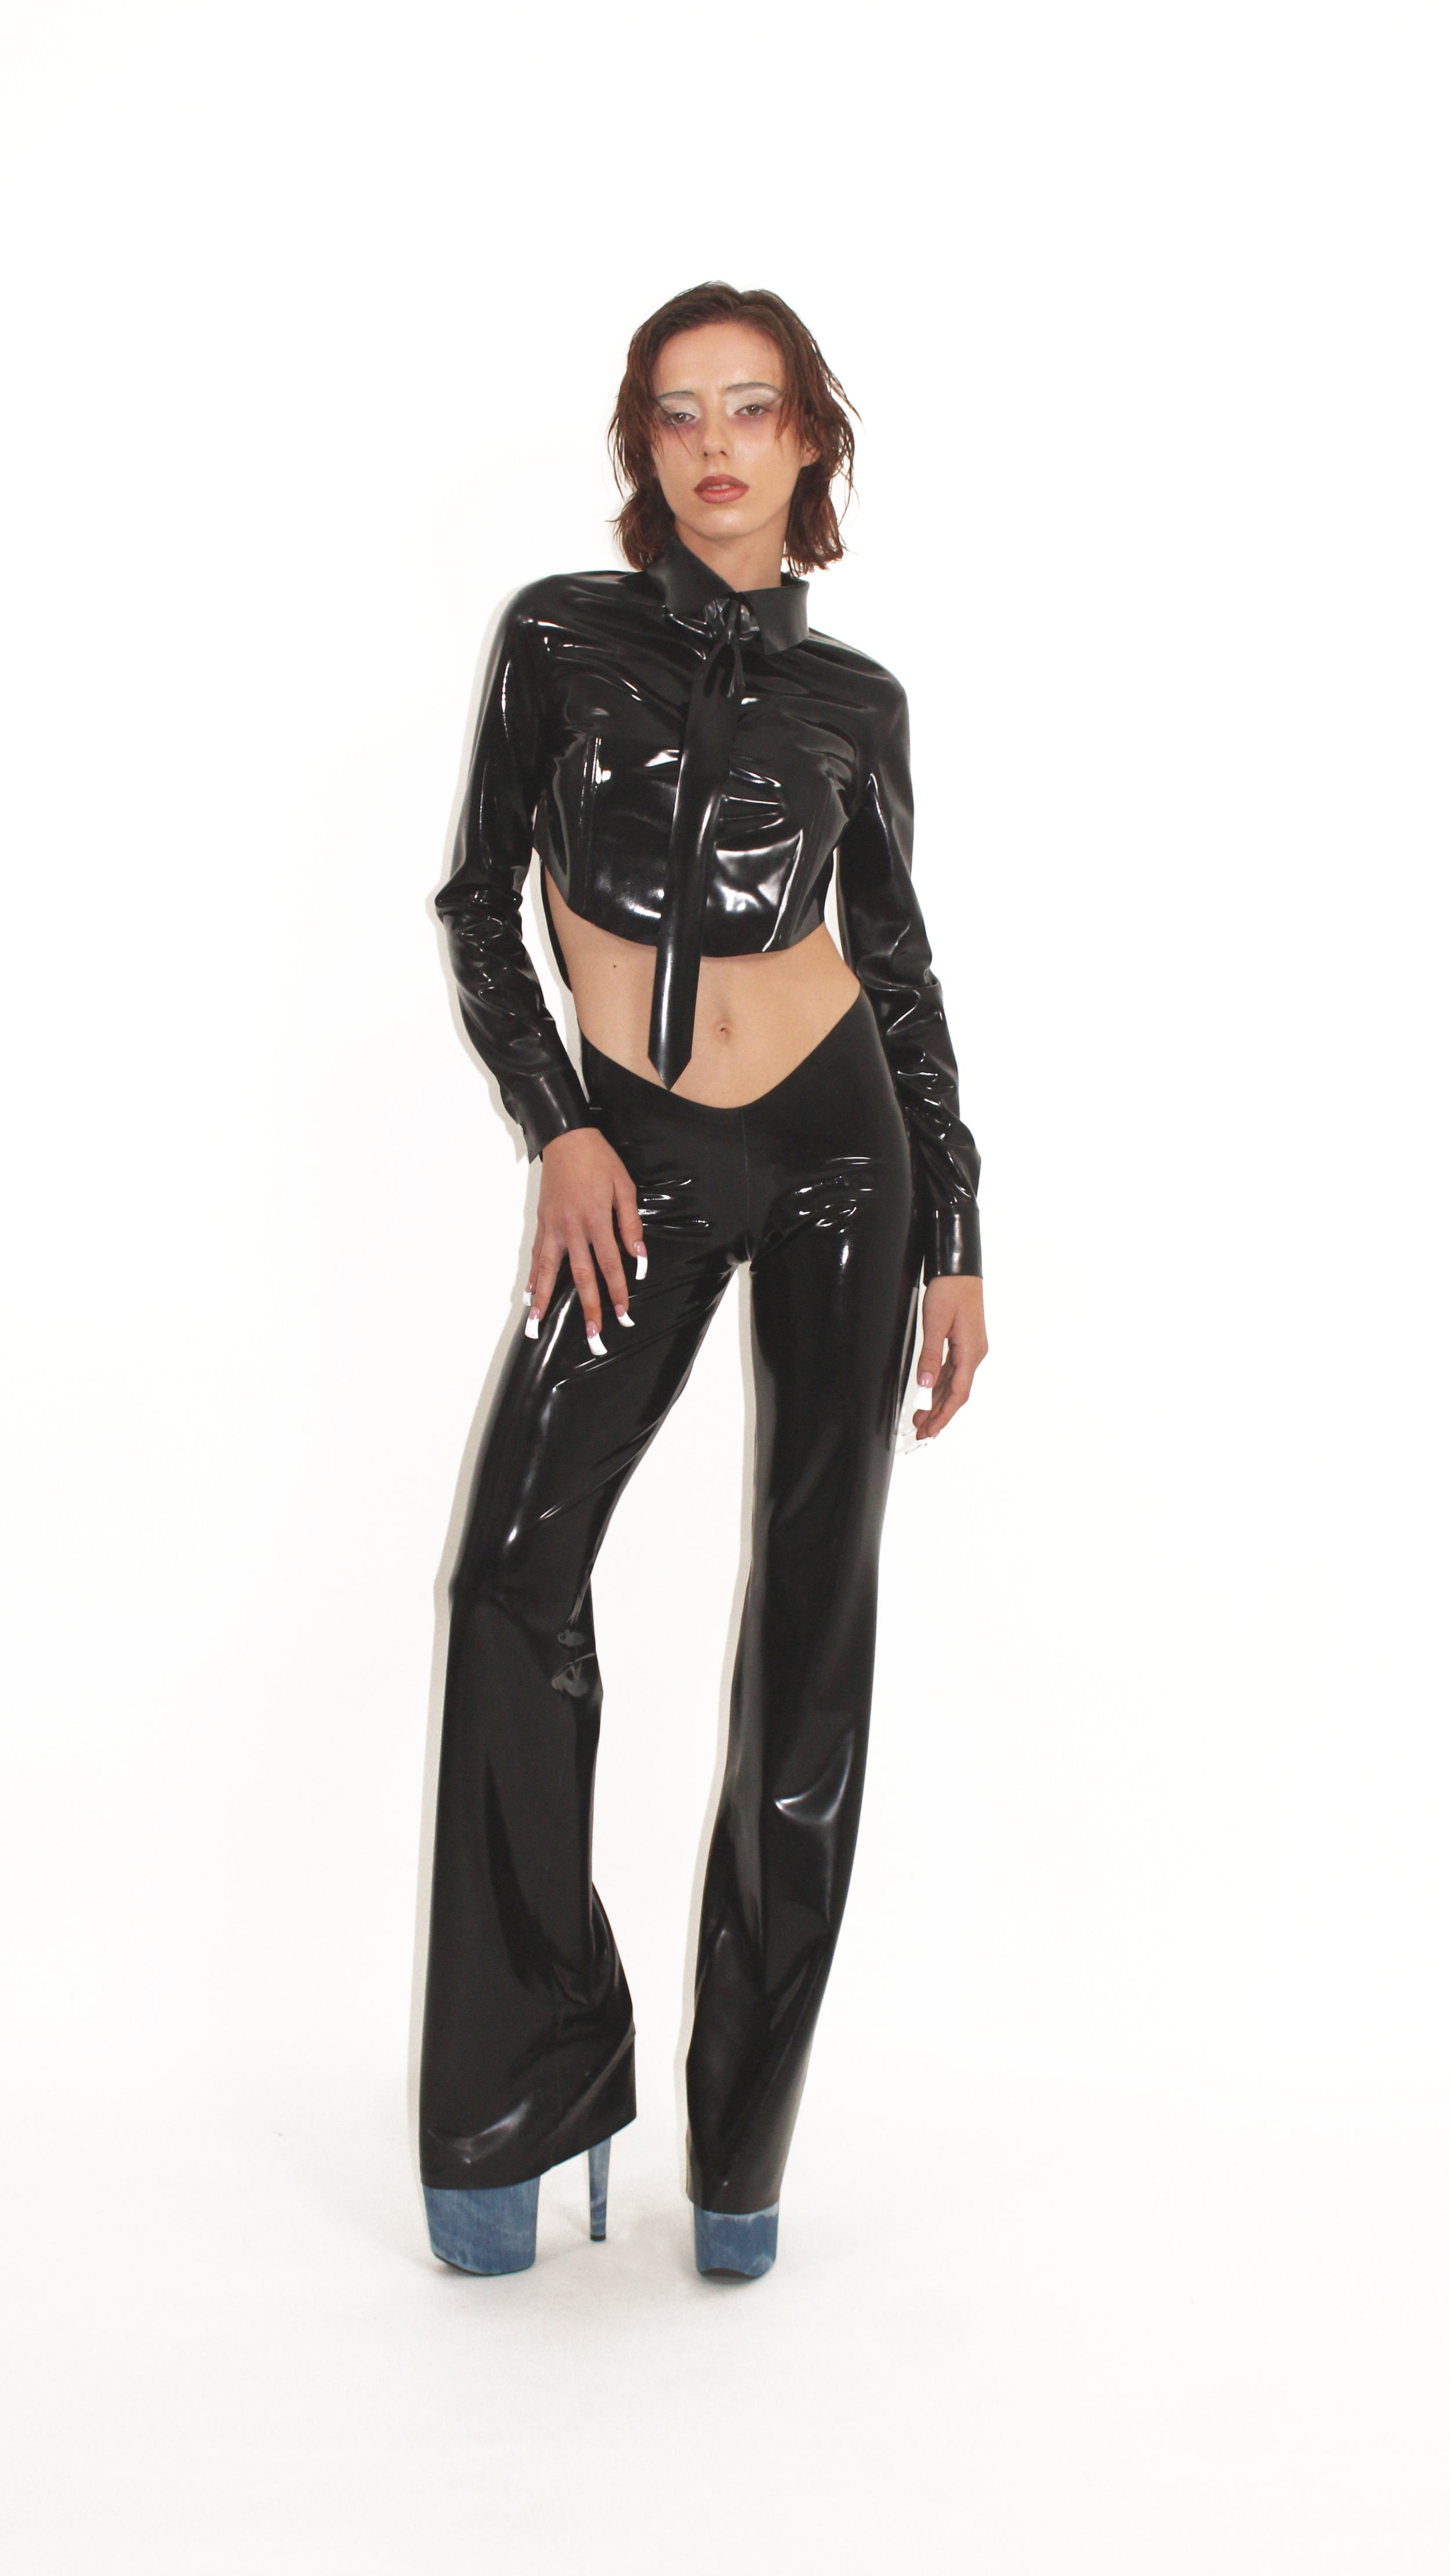 look leggings look pvc not pants not latex rubber fell Women black shiny  leather | eBay